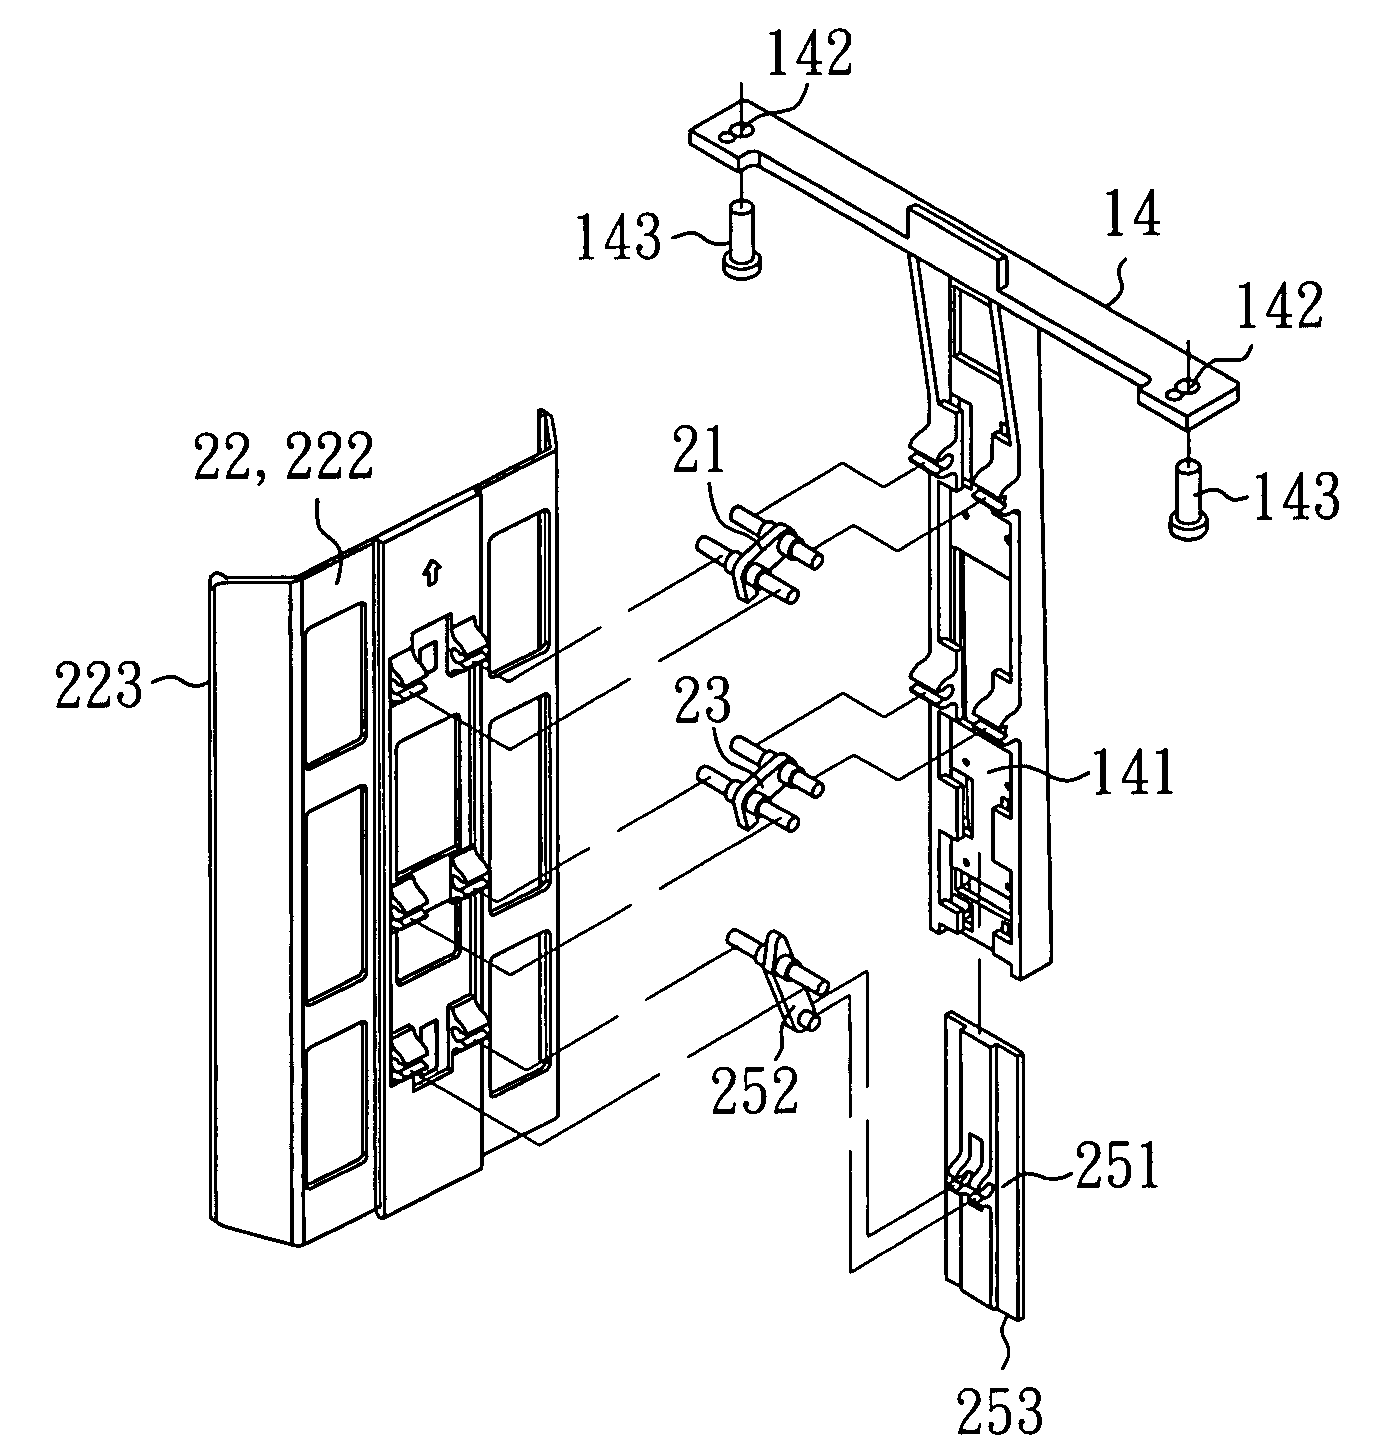 Six-bar linkage positioning mechanism